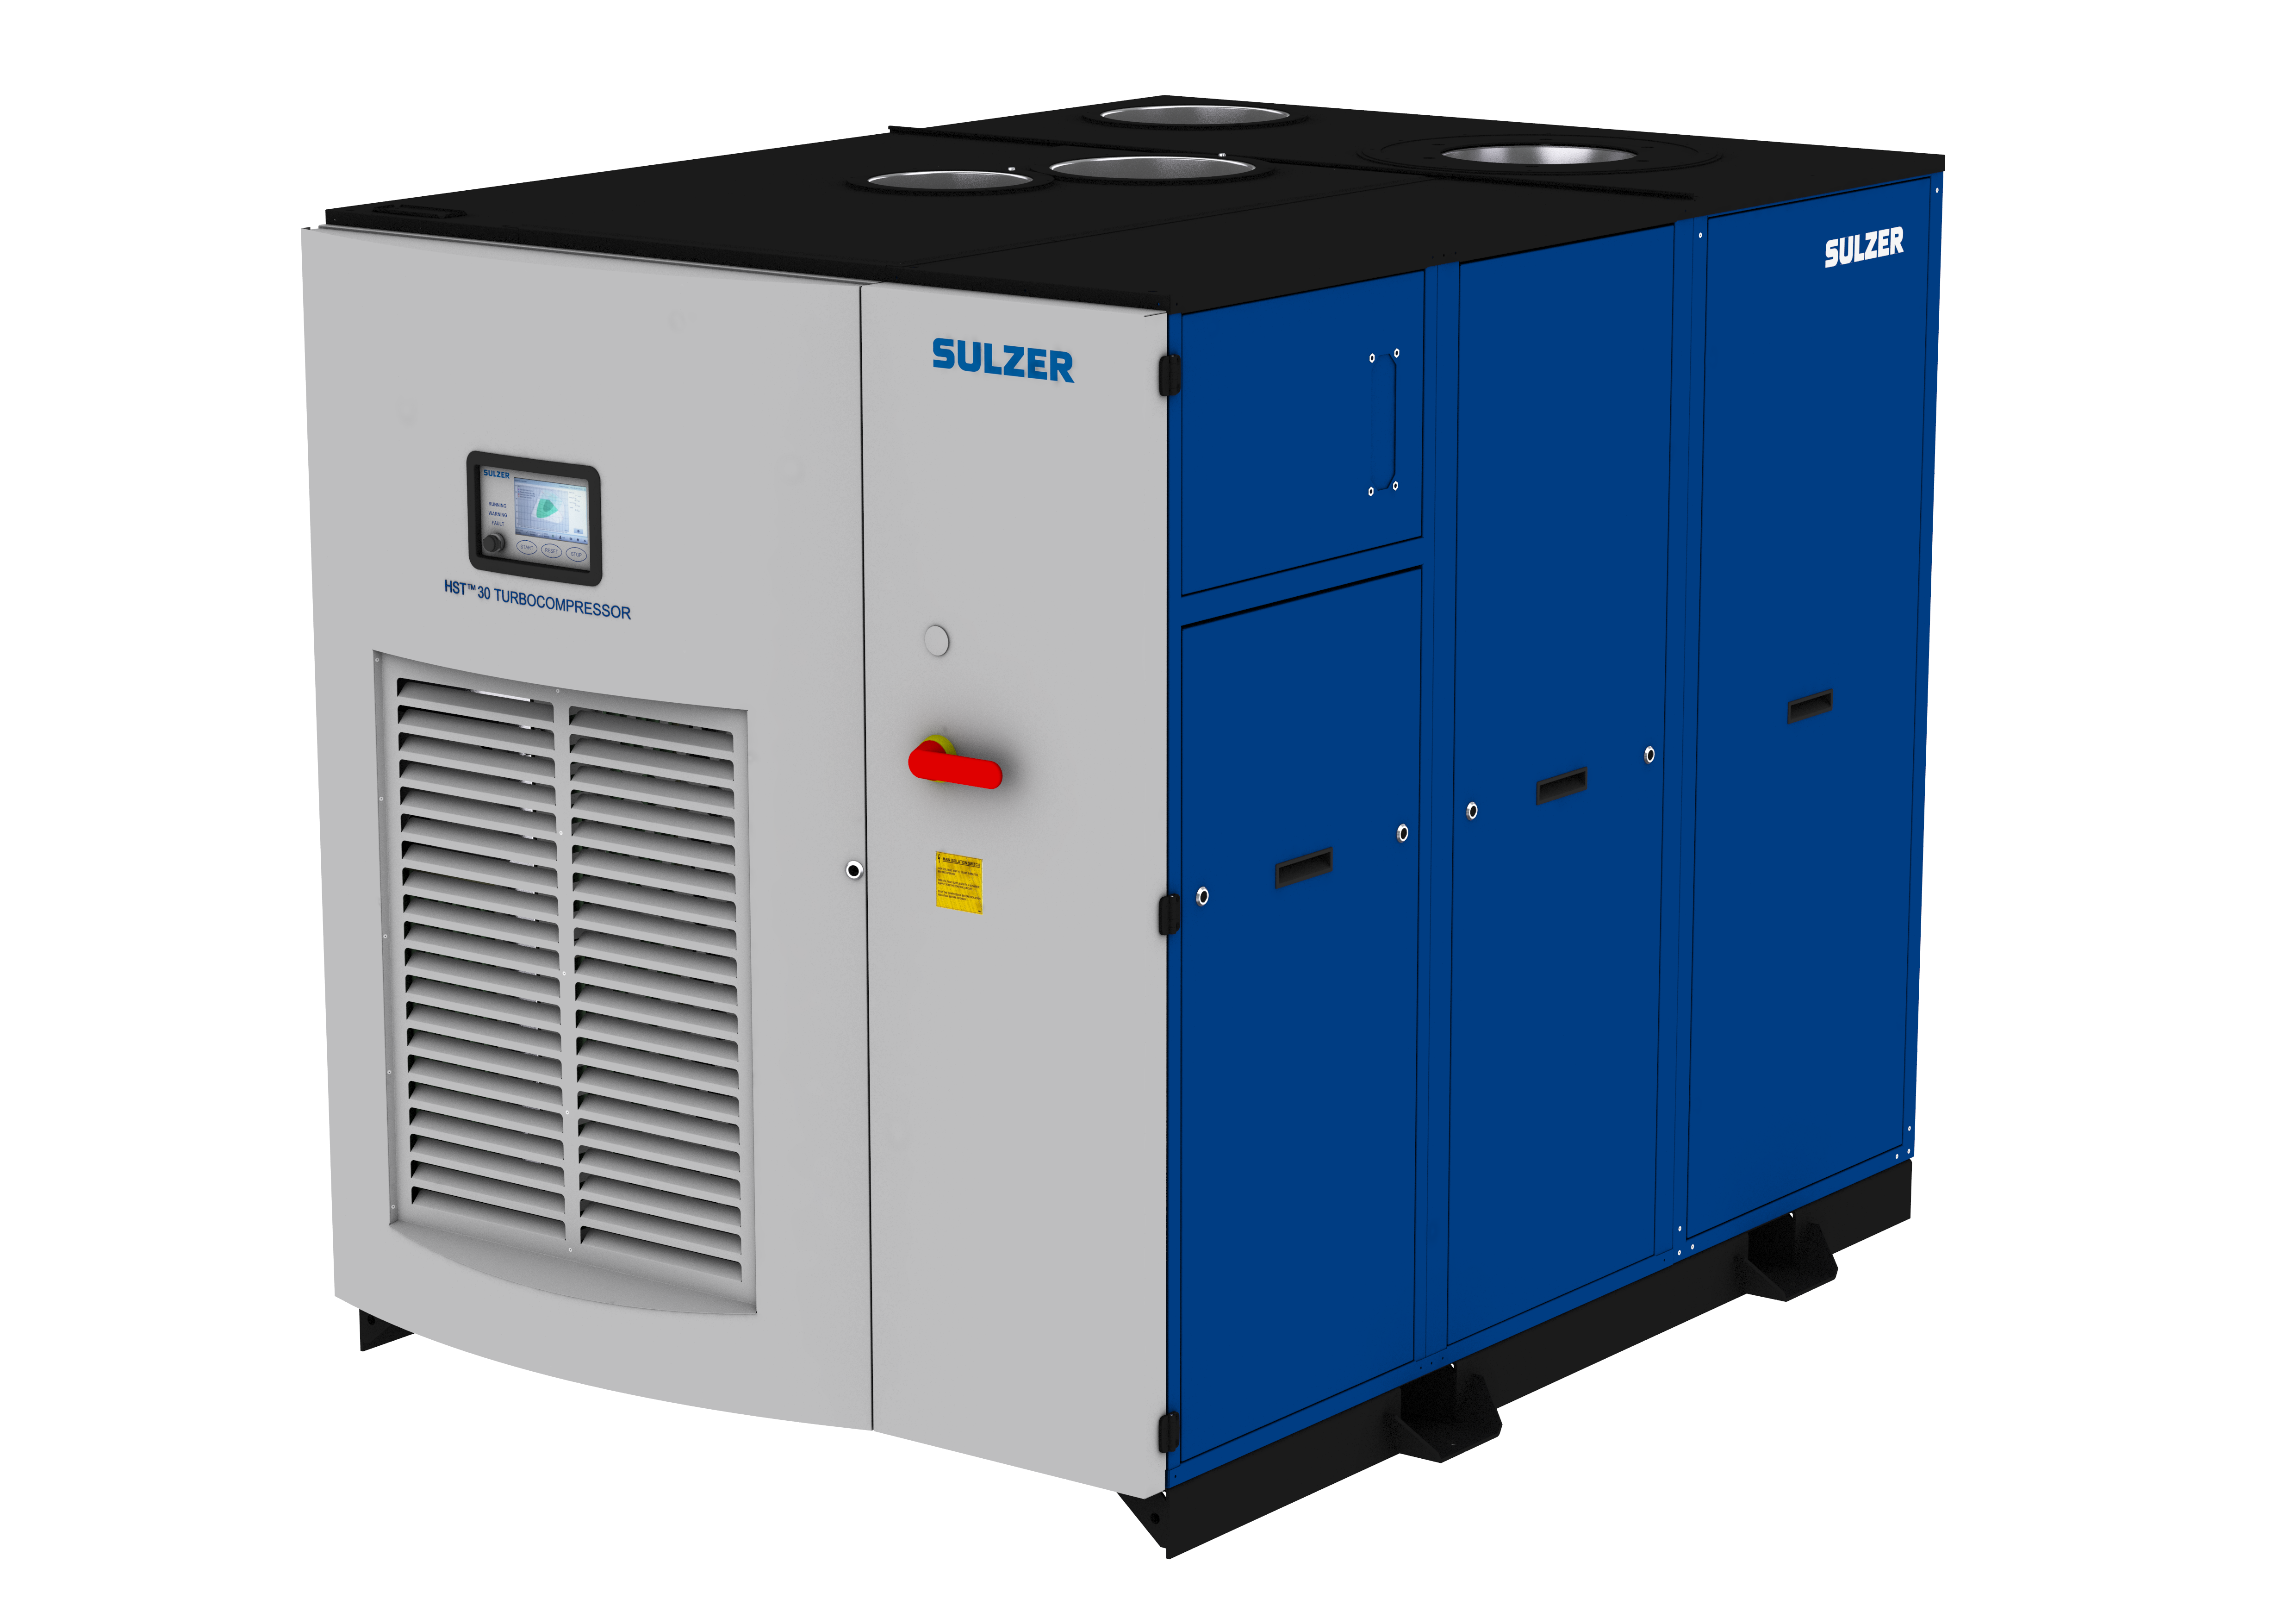 Sulzer’s new HST 30 builds on the technologies of Sulzer’s third generation high-speed turbocompressors.